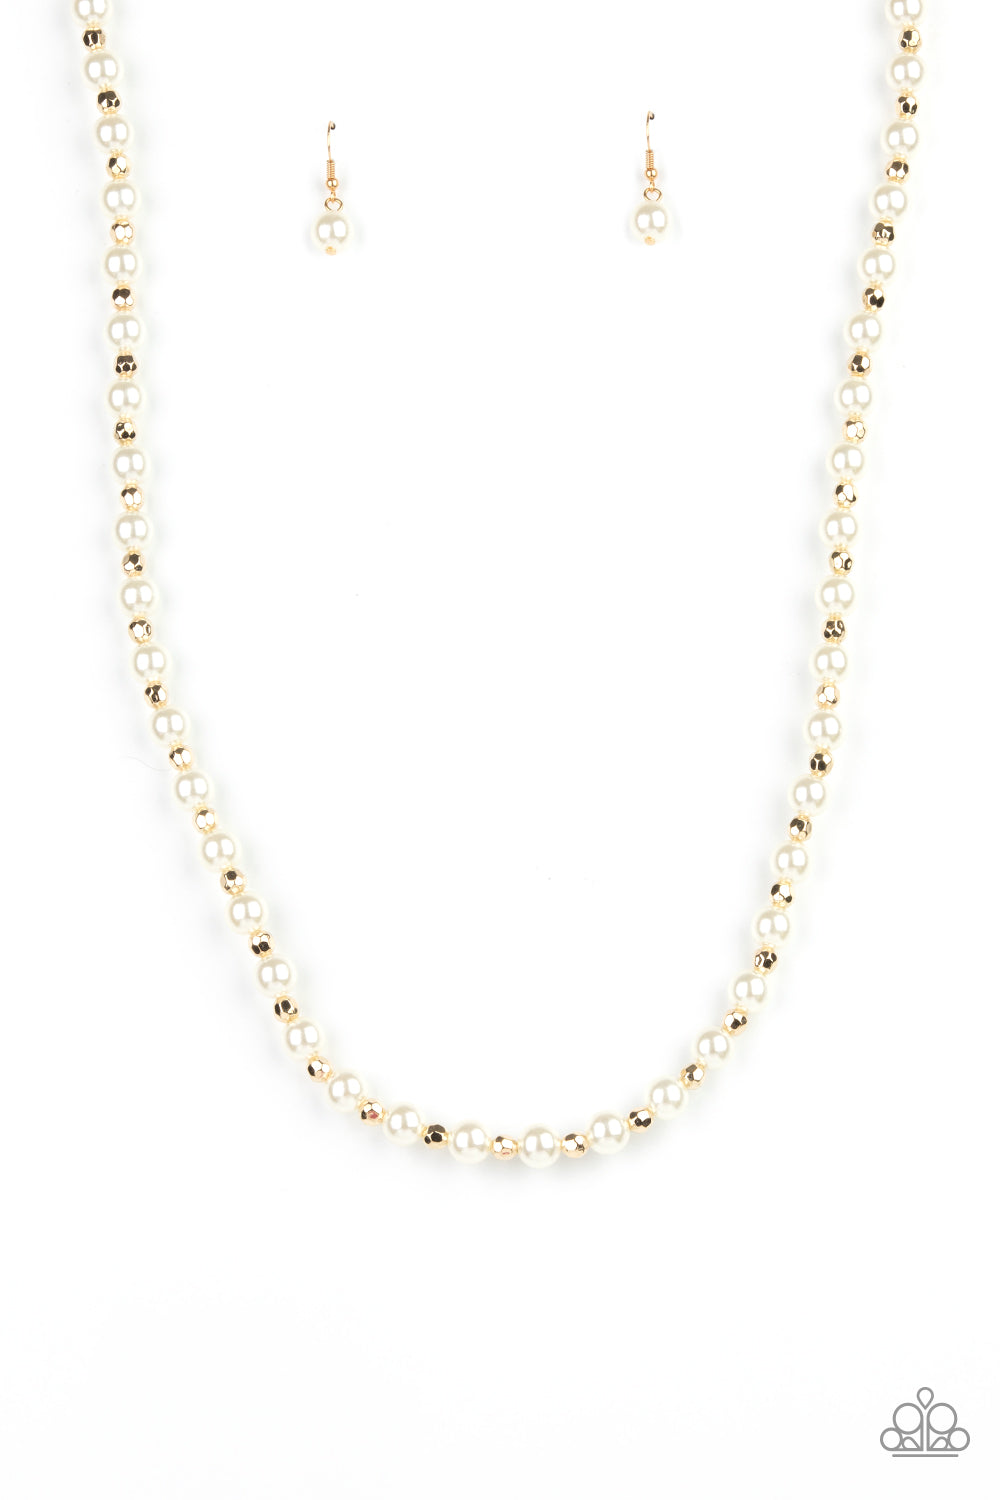 Nautical Novelty - Gold & White Pearl Necklace Set - Princess Glam Shop